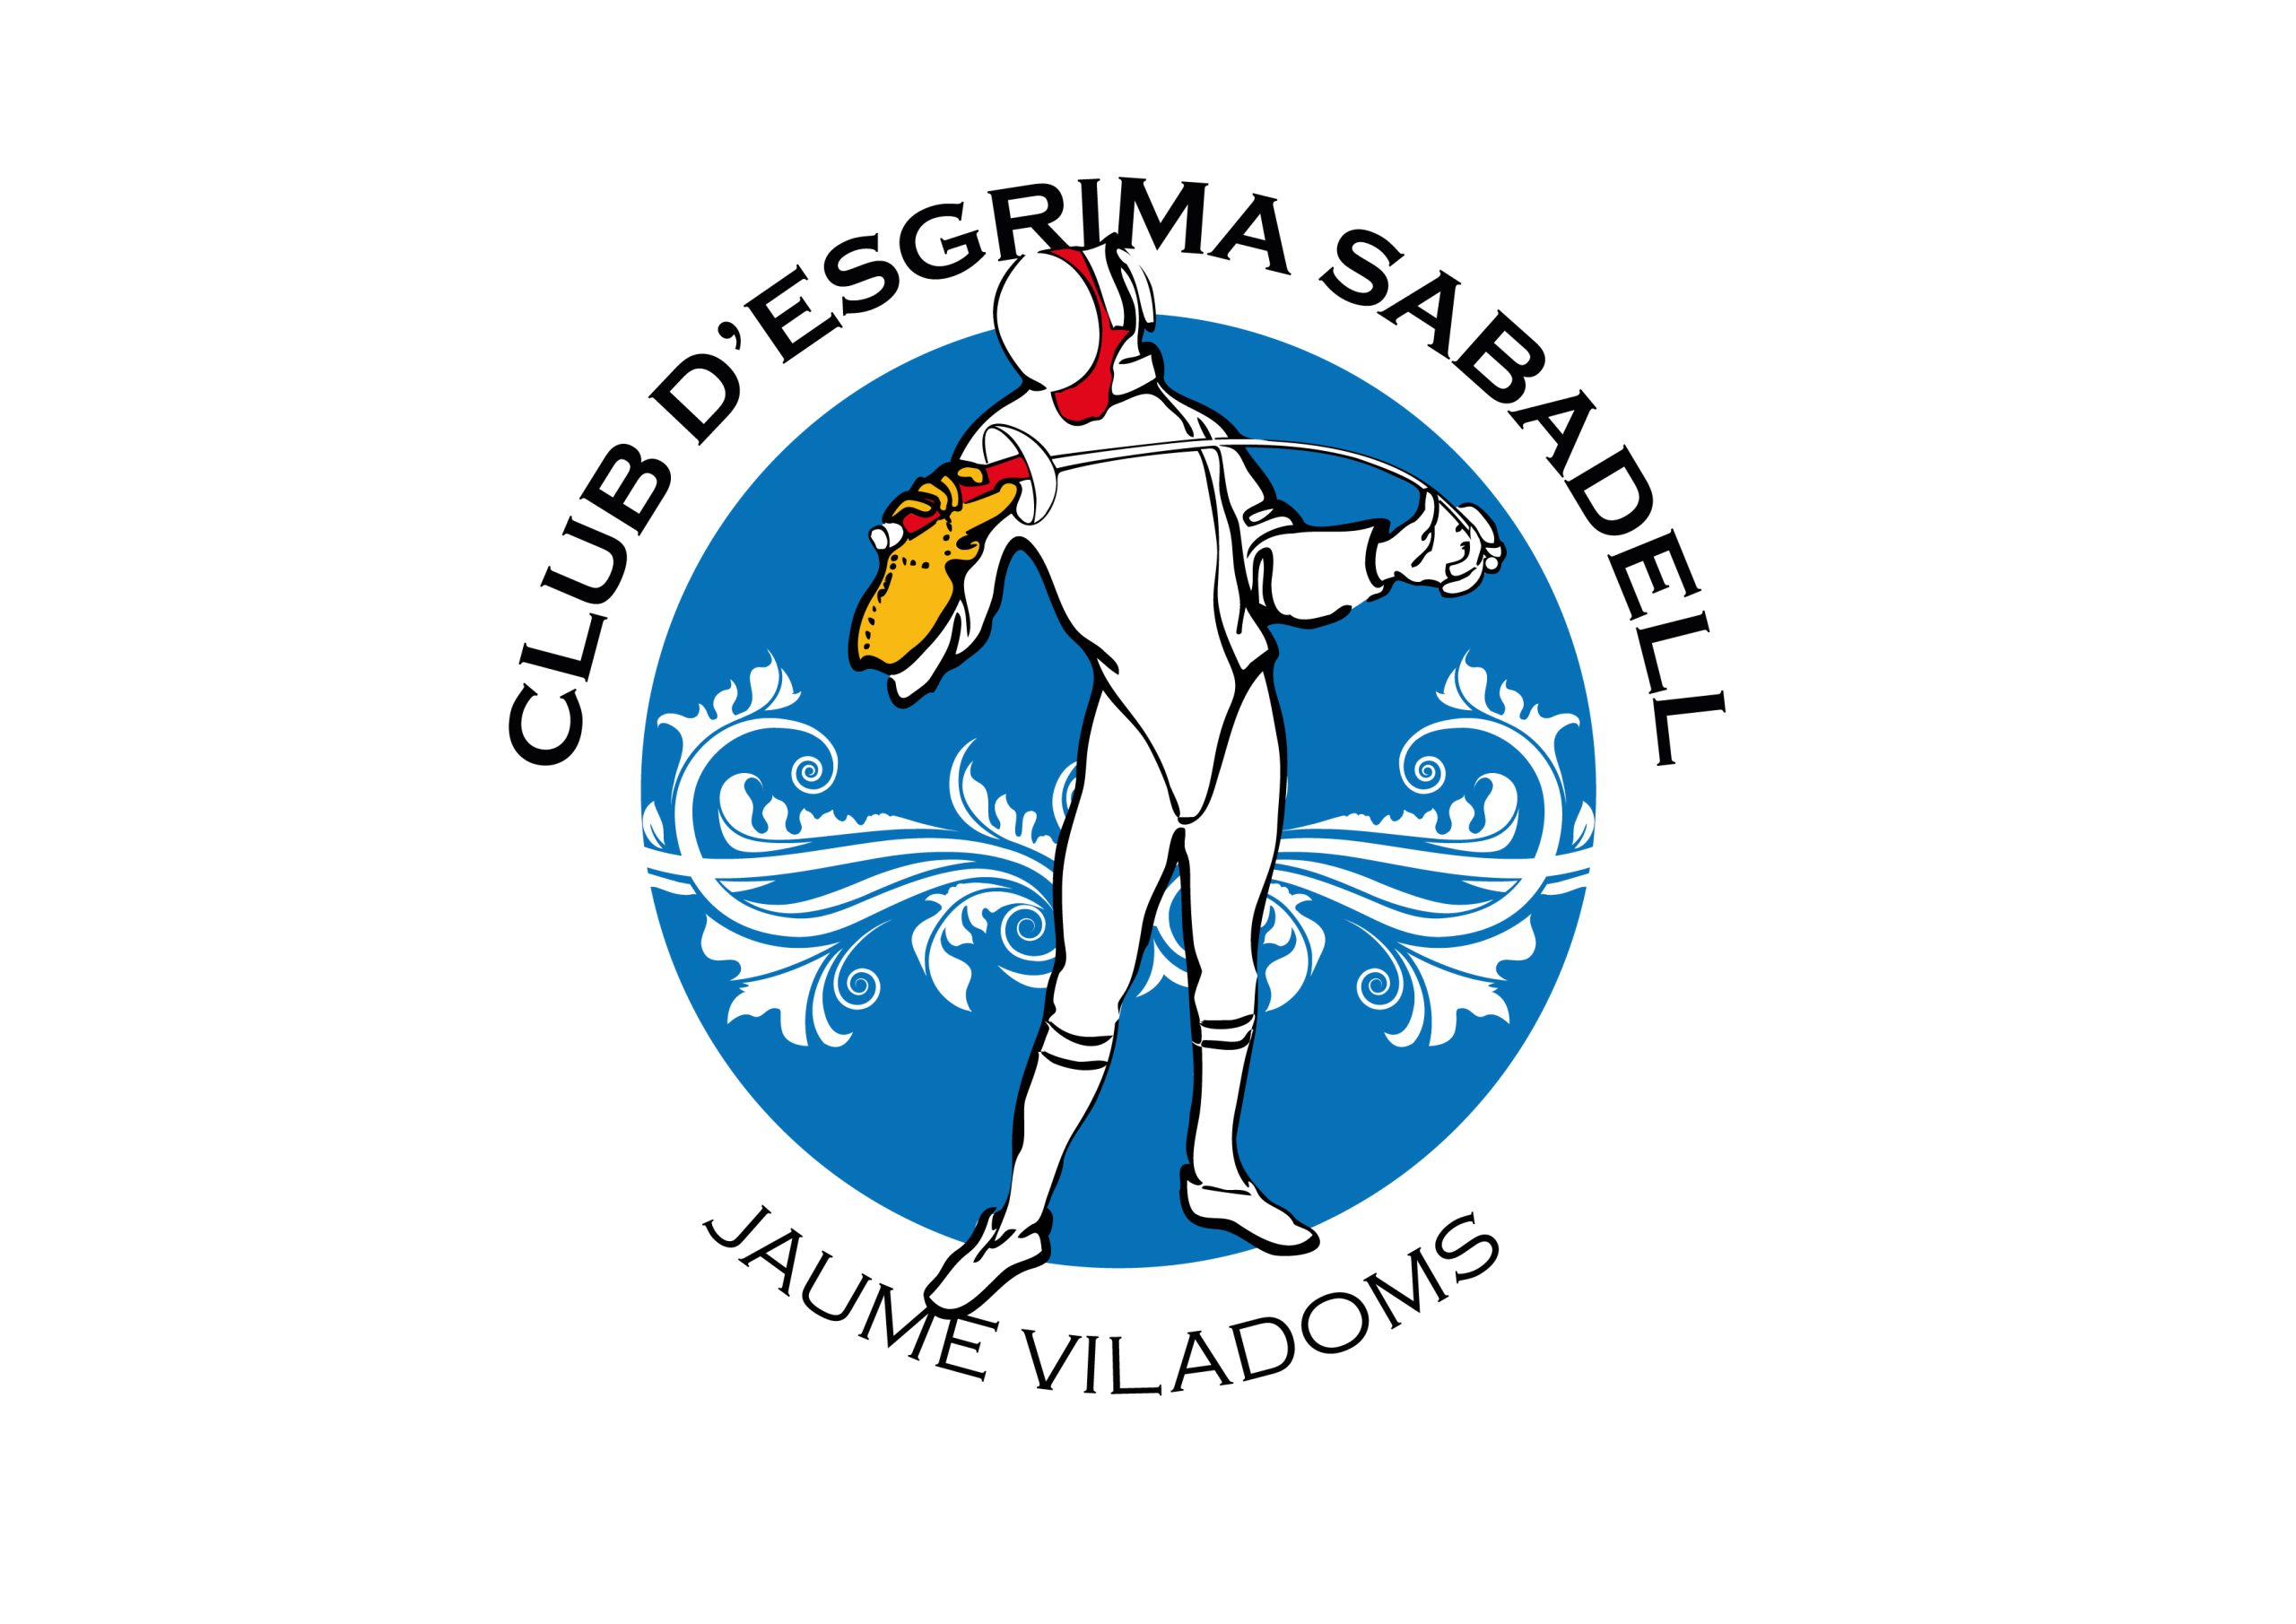 Club d'Esgrima Sabadell - Jaume Viladoms